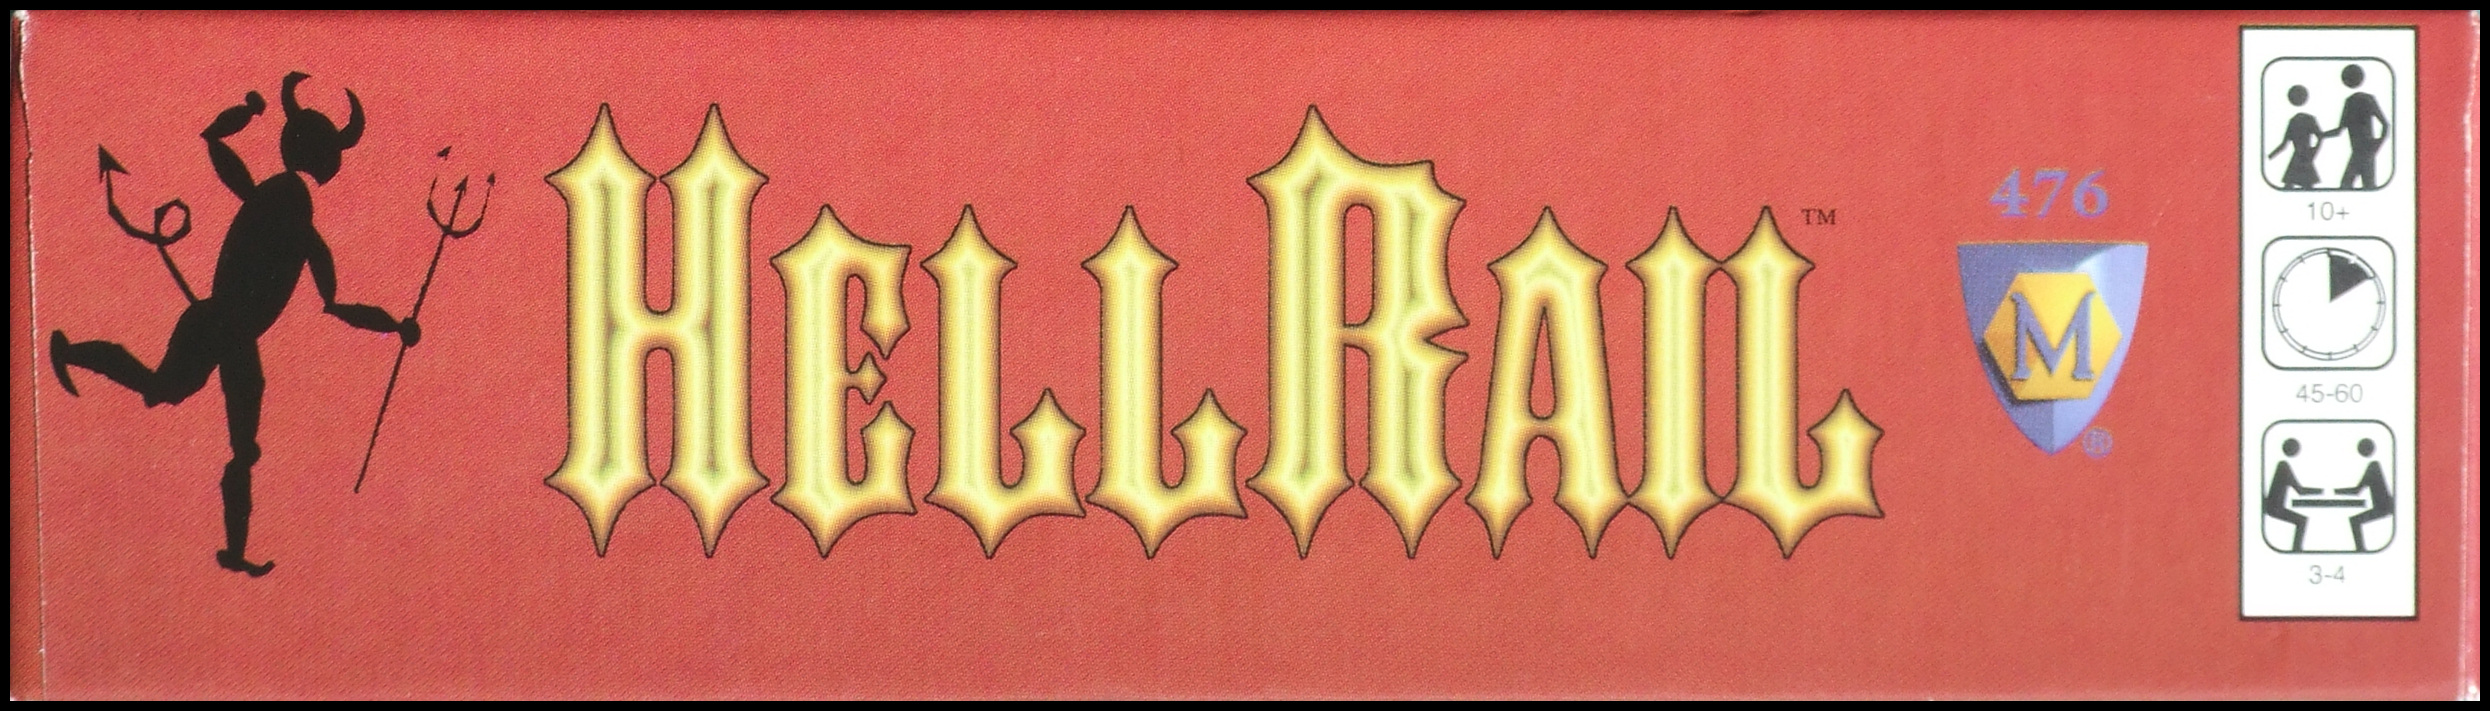 HellRail: Third Perdition - Box Side 1